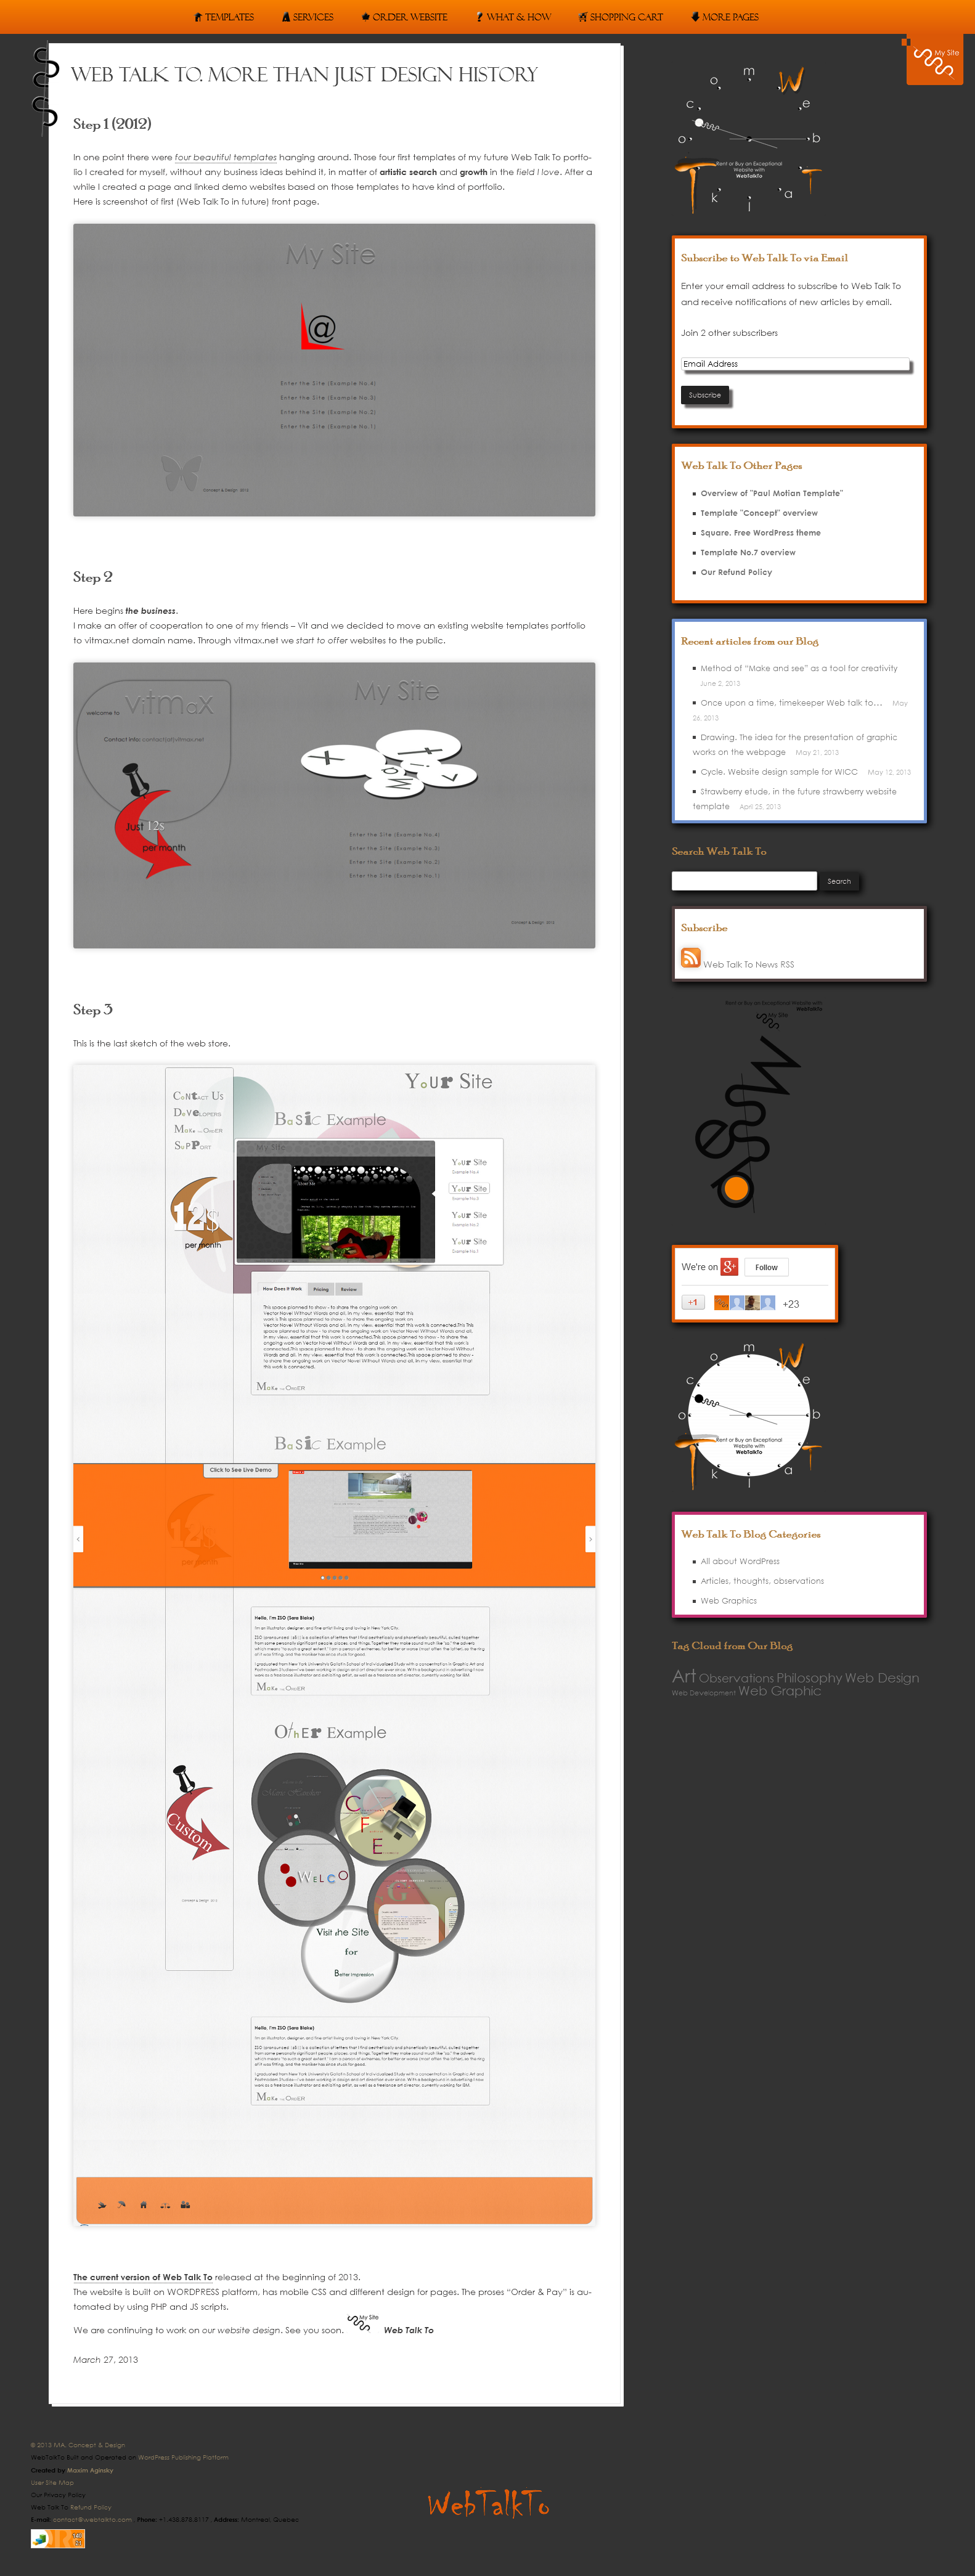 Site-Page WebTalkTo design version2